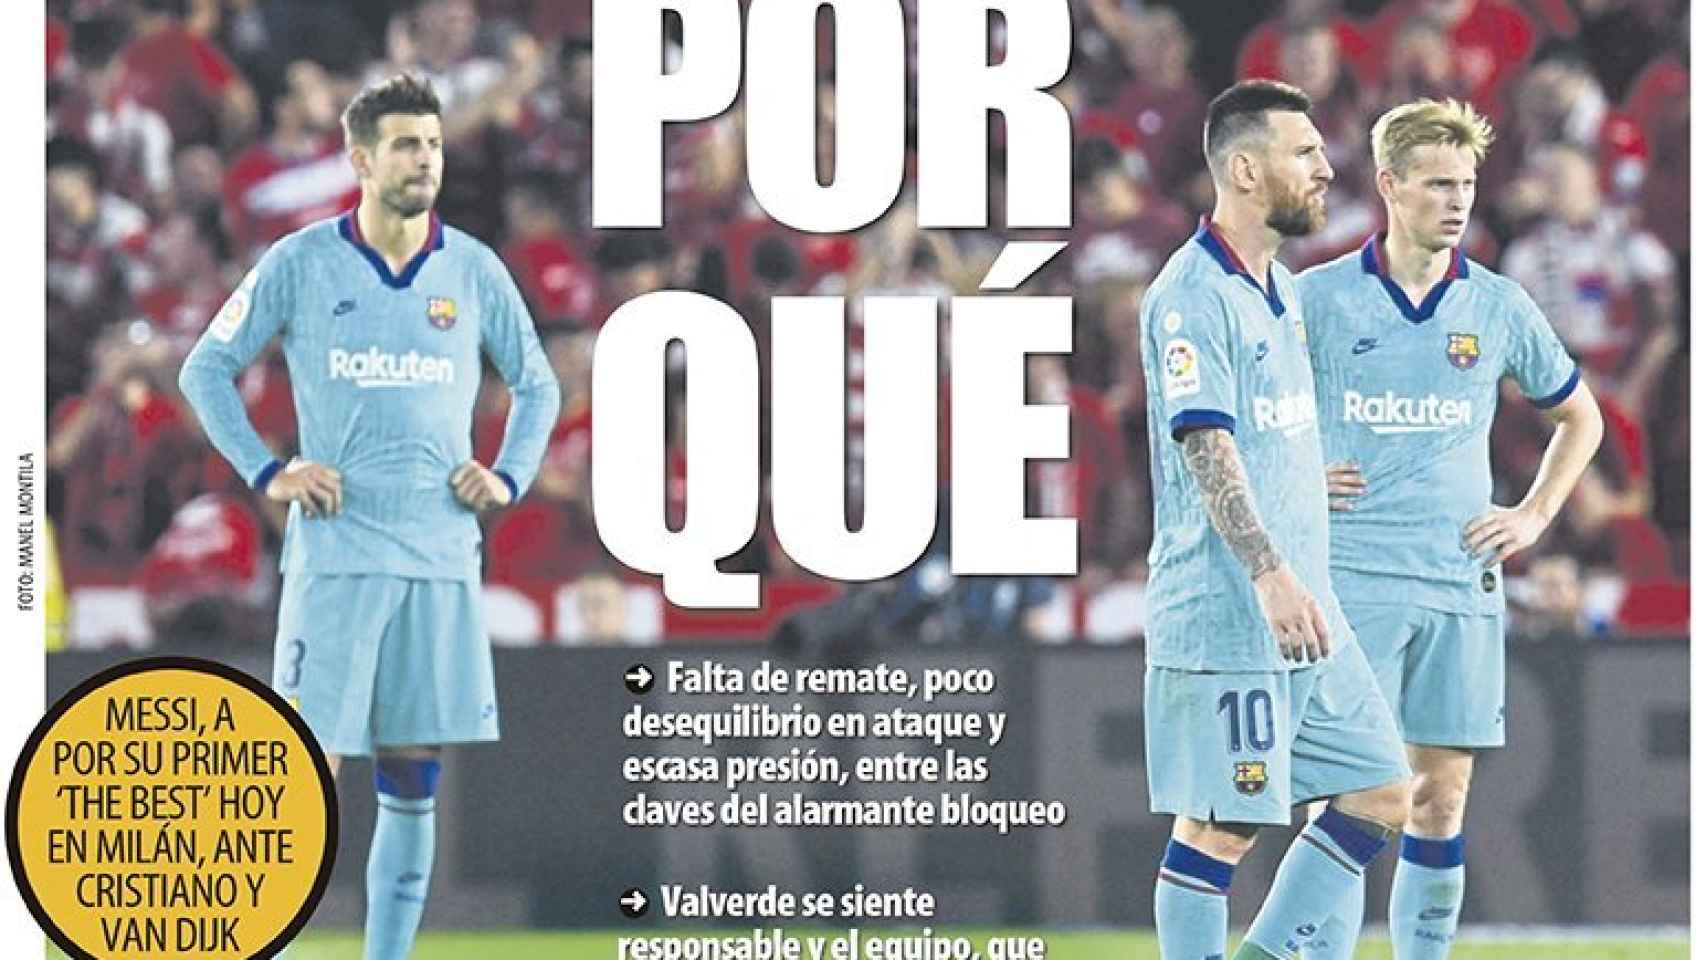 La portada del diario Mundo Deportivo (23/09/2019)1706 x 960